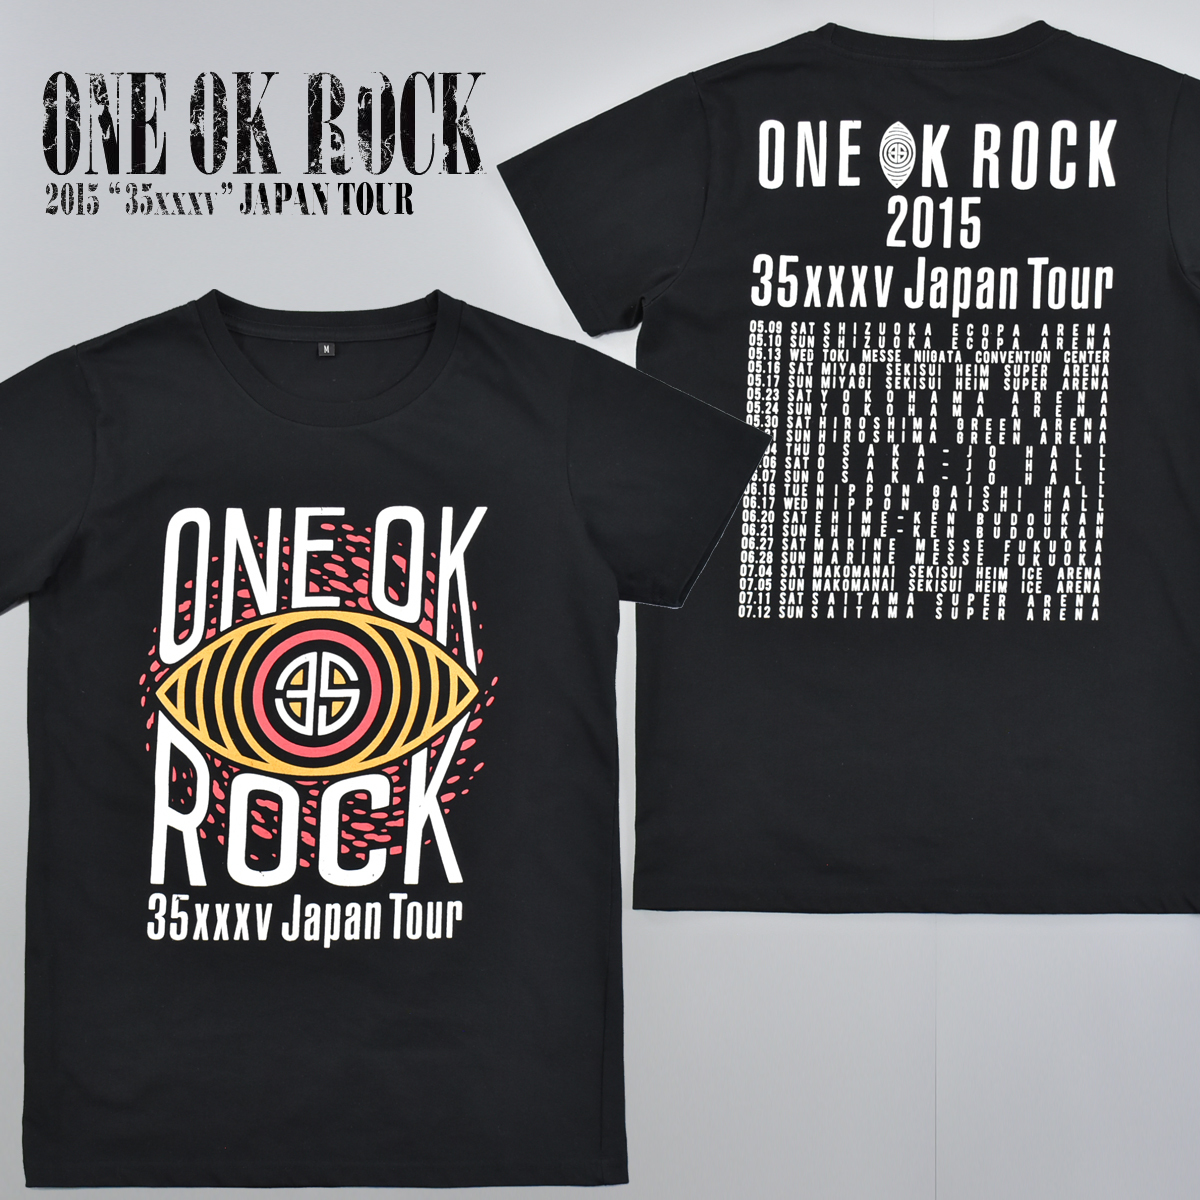 ONE OK ROCK 2015 35xxxv JAPAN TOUR